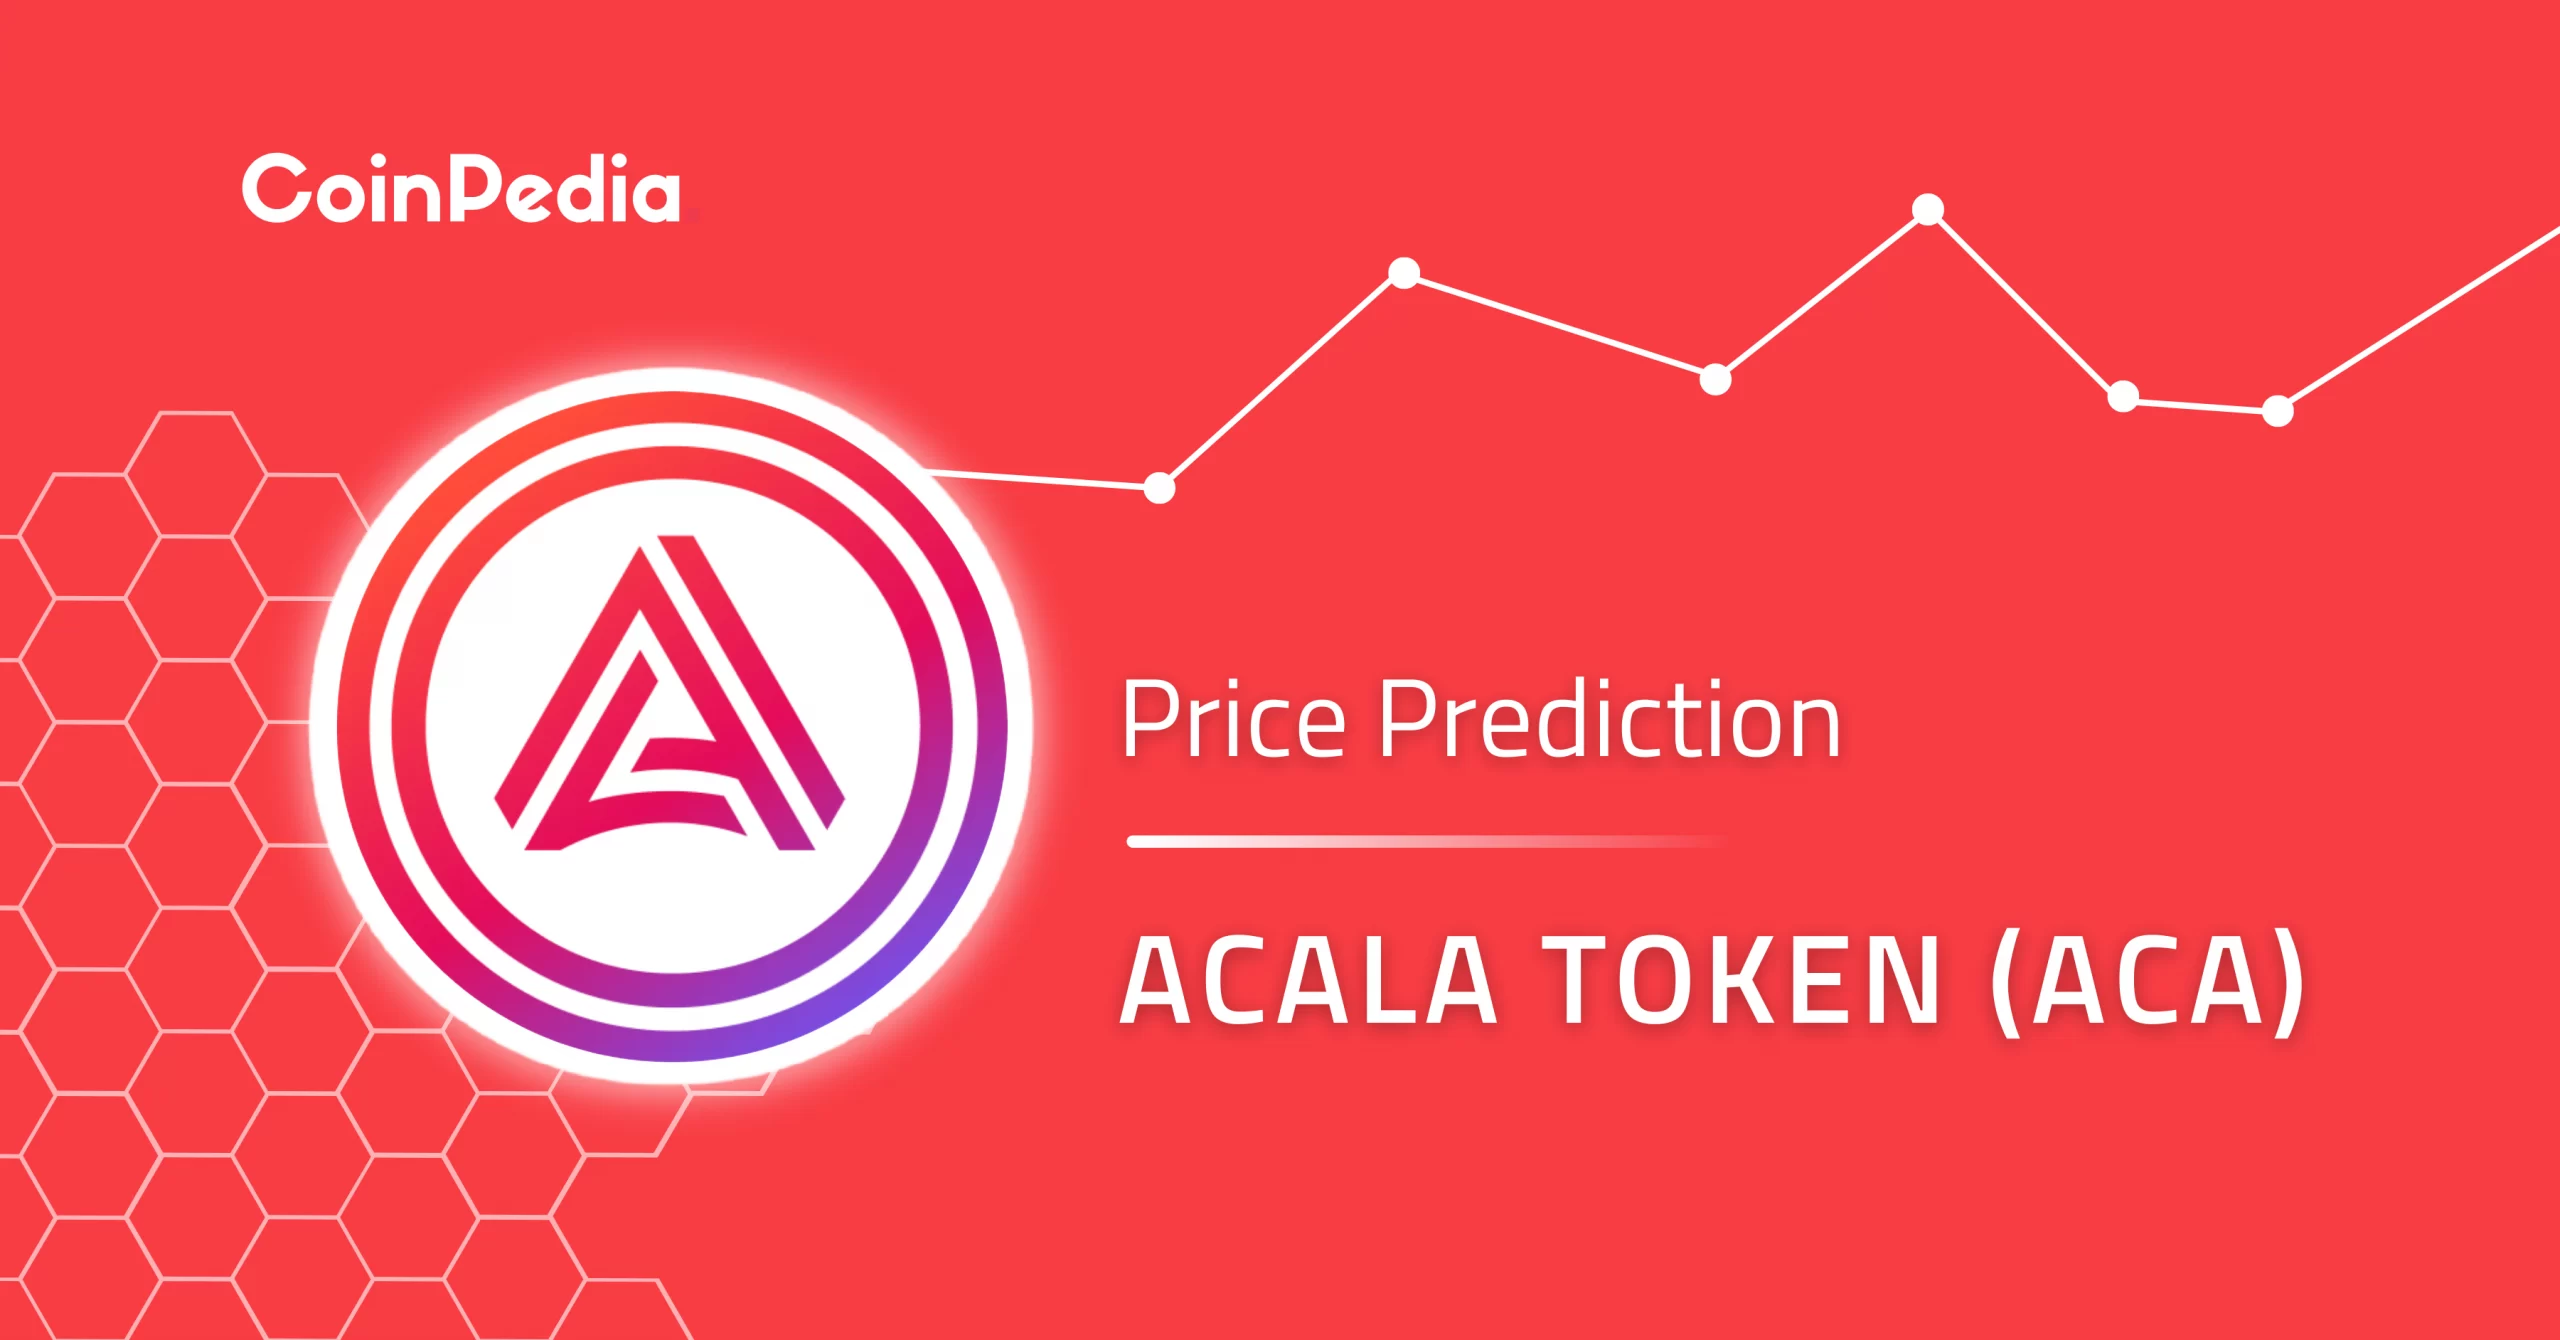 Acala (ACA) Price Prediction 2022, 2023, 2024, 2025: Will It Skyrocket To Reach $4? thumbnail